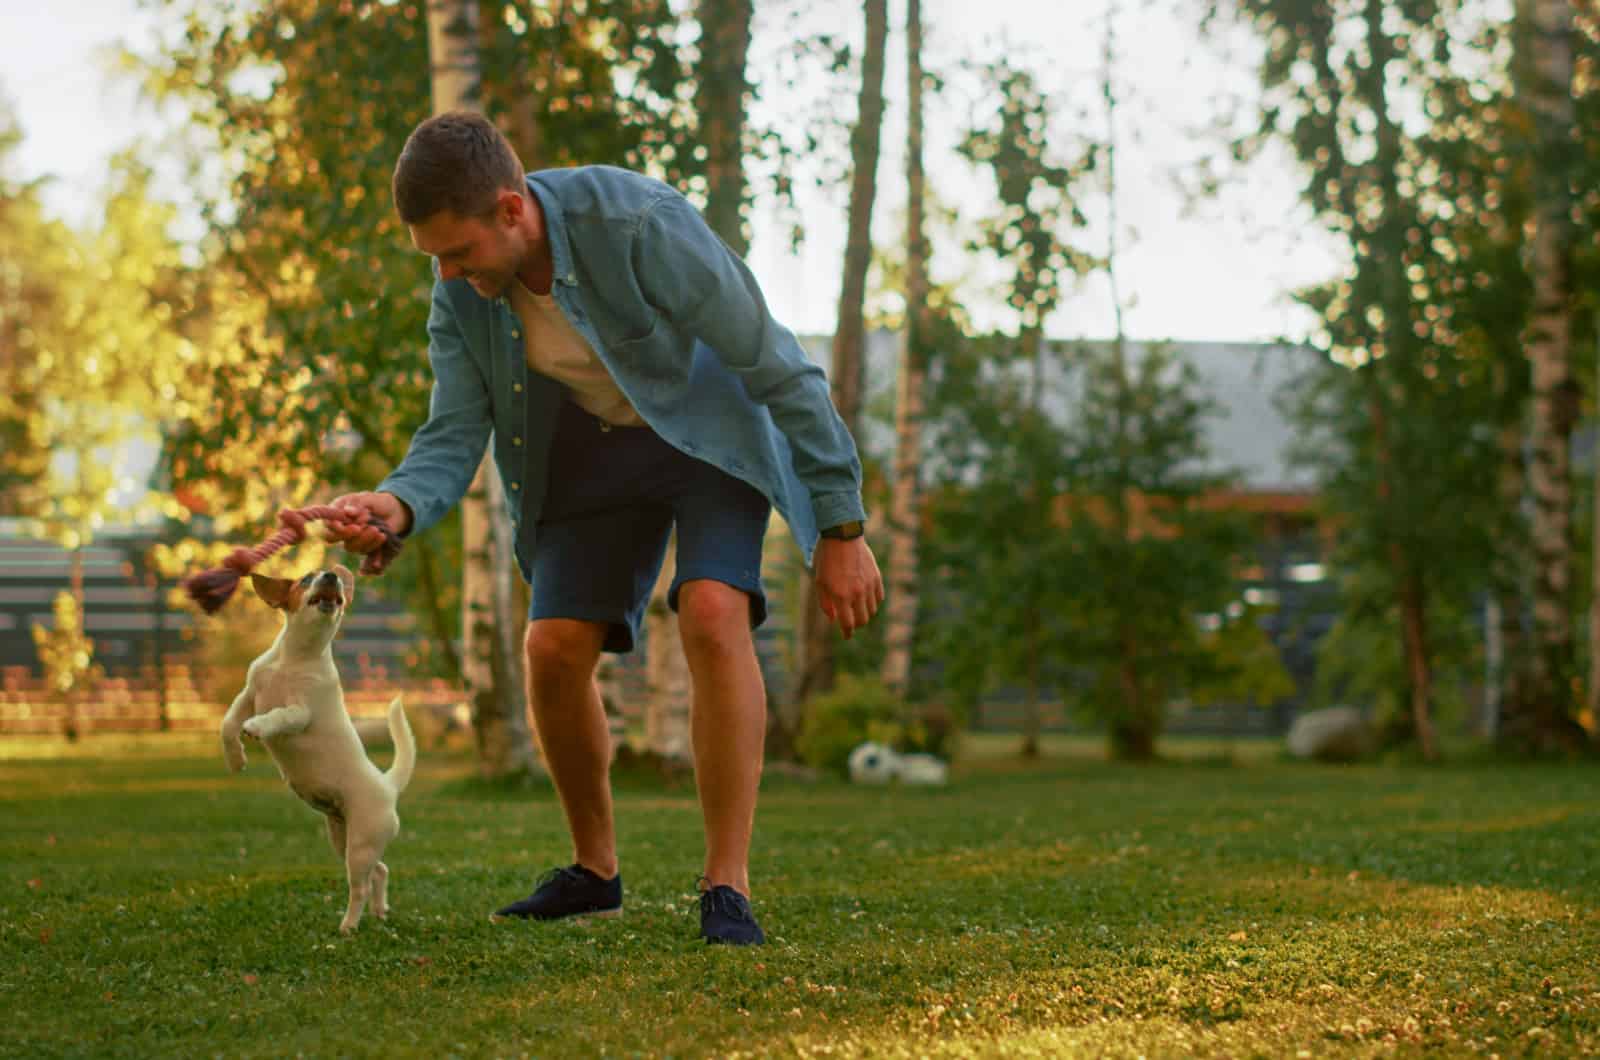 man plays fetch with a dog